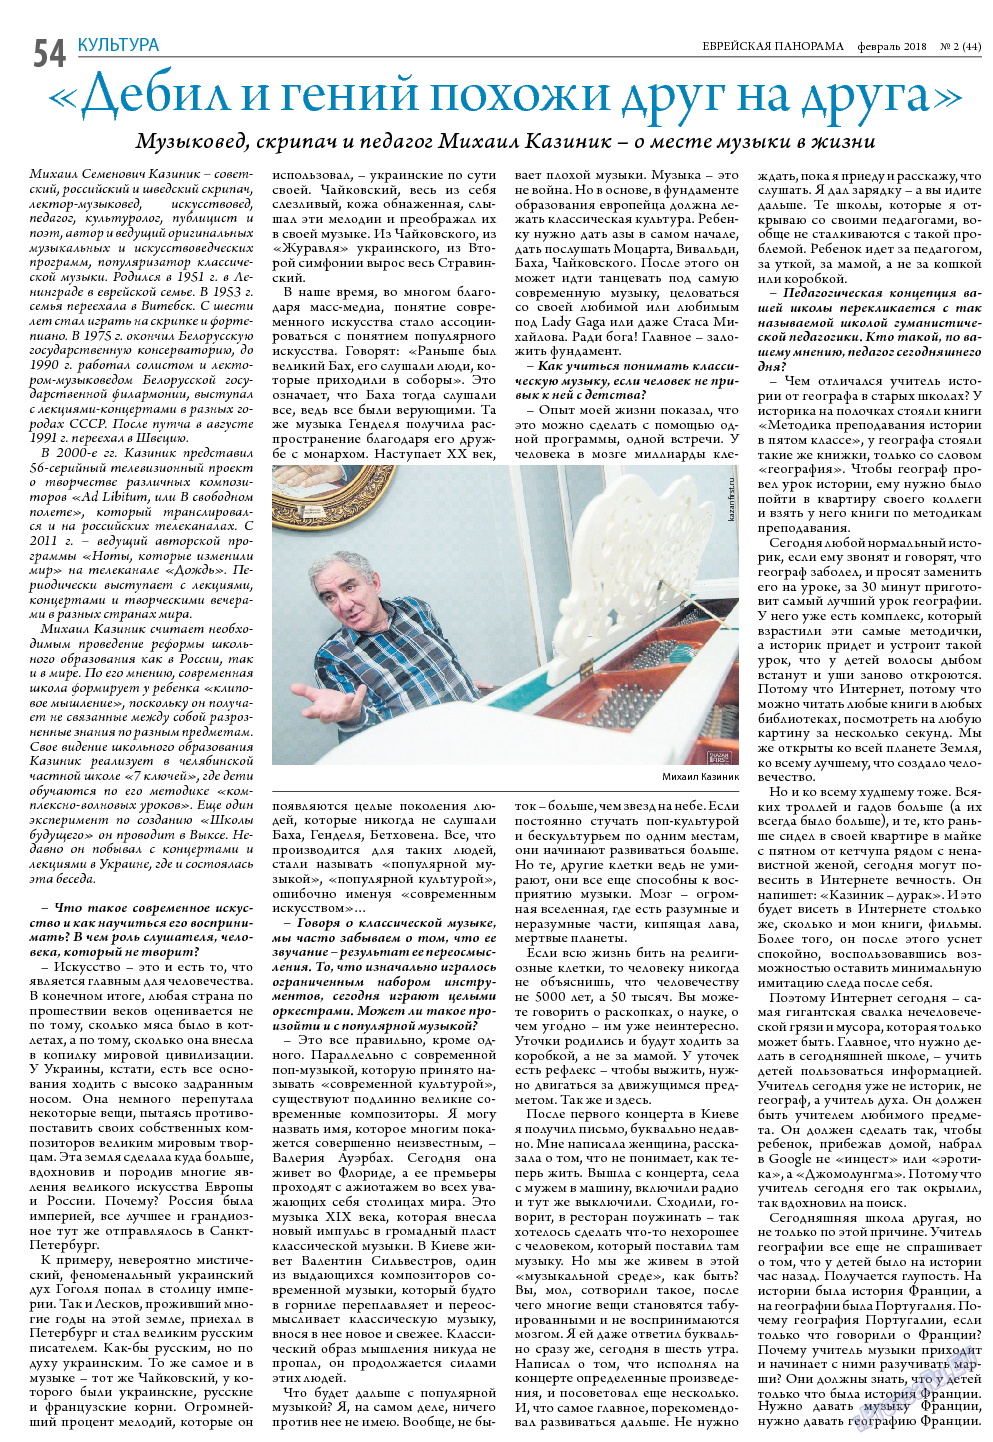 Еврейская панорама, газета. 2018 №2 стр.54